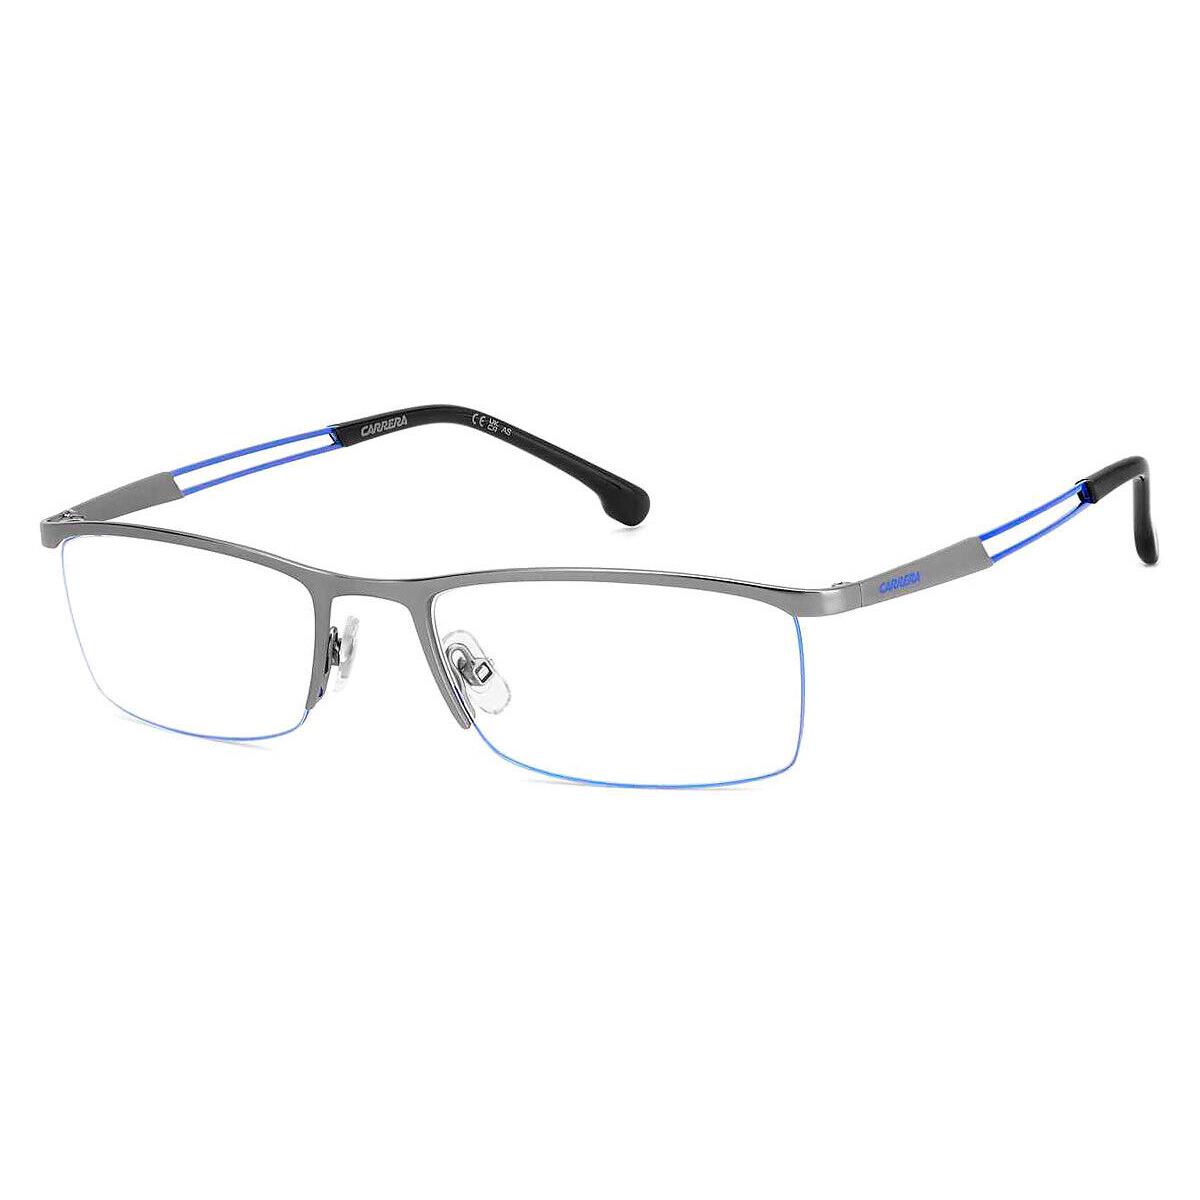 Carrera Car Eyeglasses Men Matte Dark Ruthenium Blue 54mm